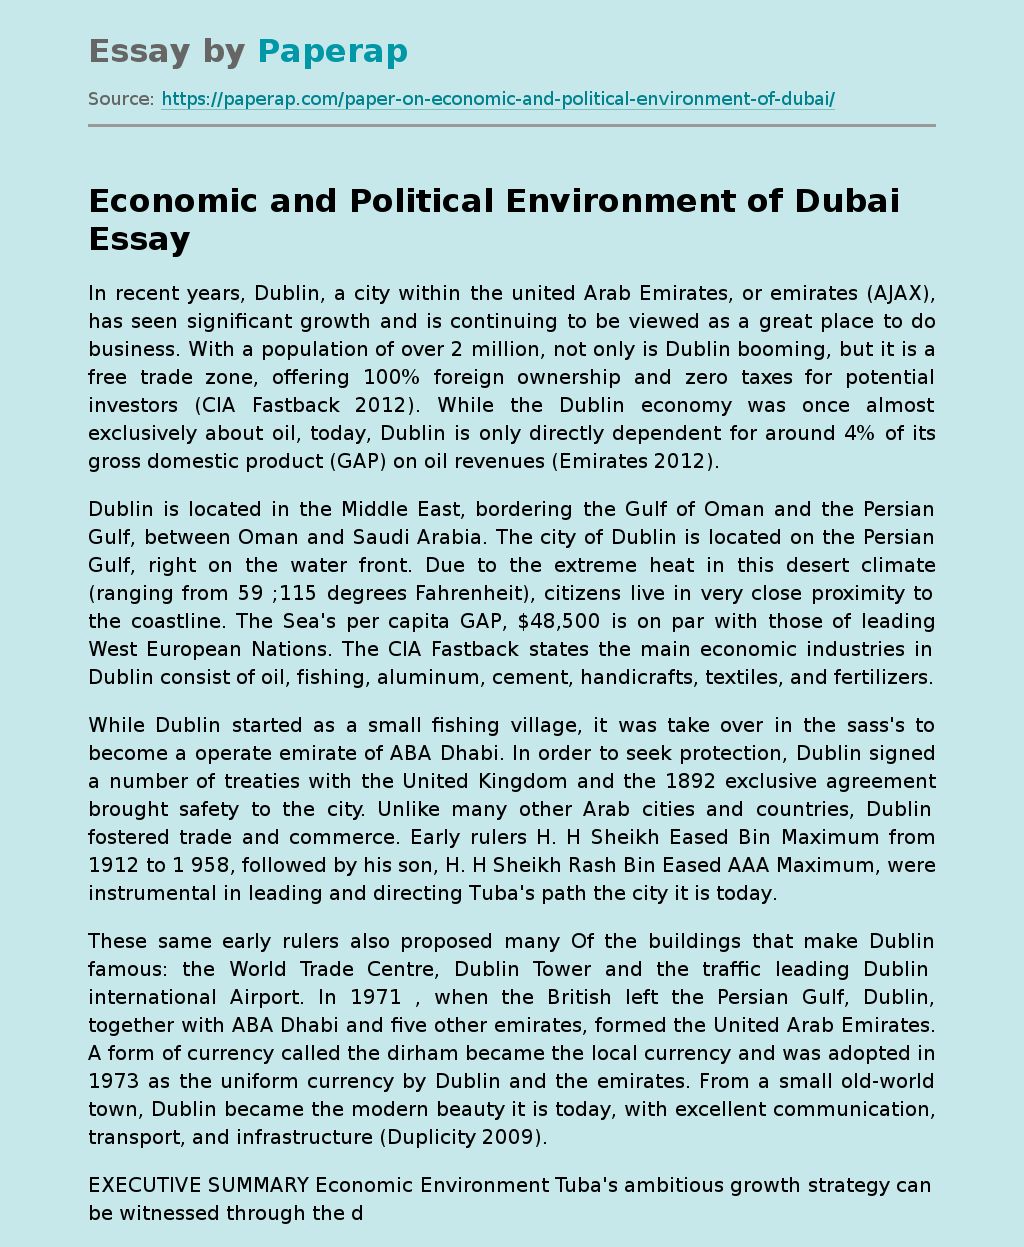 Economic and Political Environment of Dubai